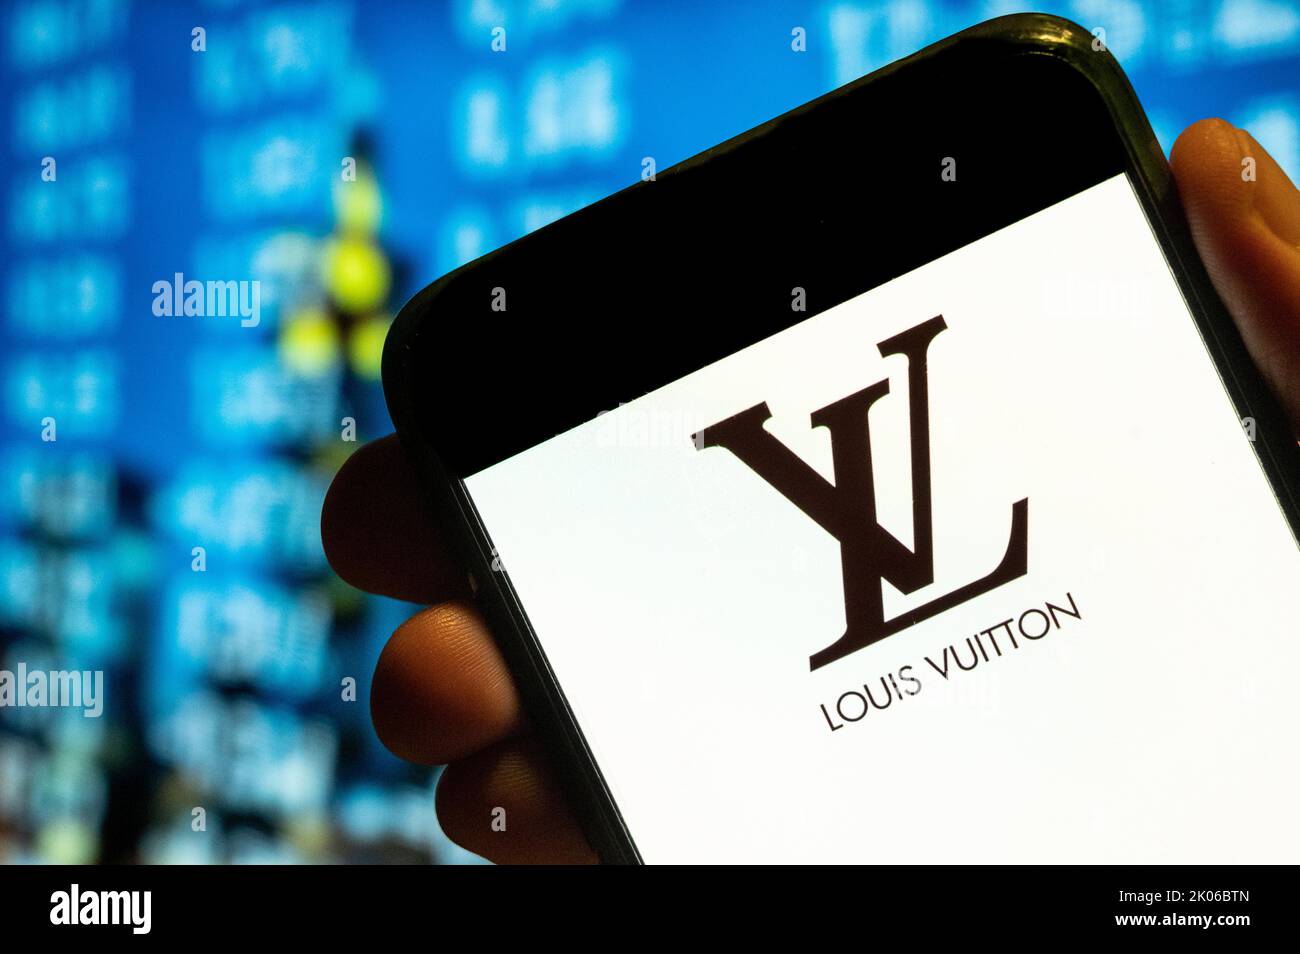 Louis Vuitton Logo Stock Illustrations – 106 Louis Vuitton Logo